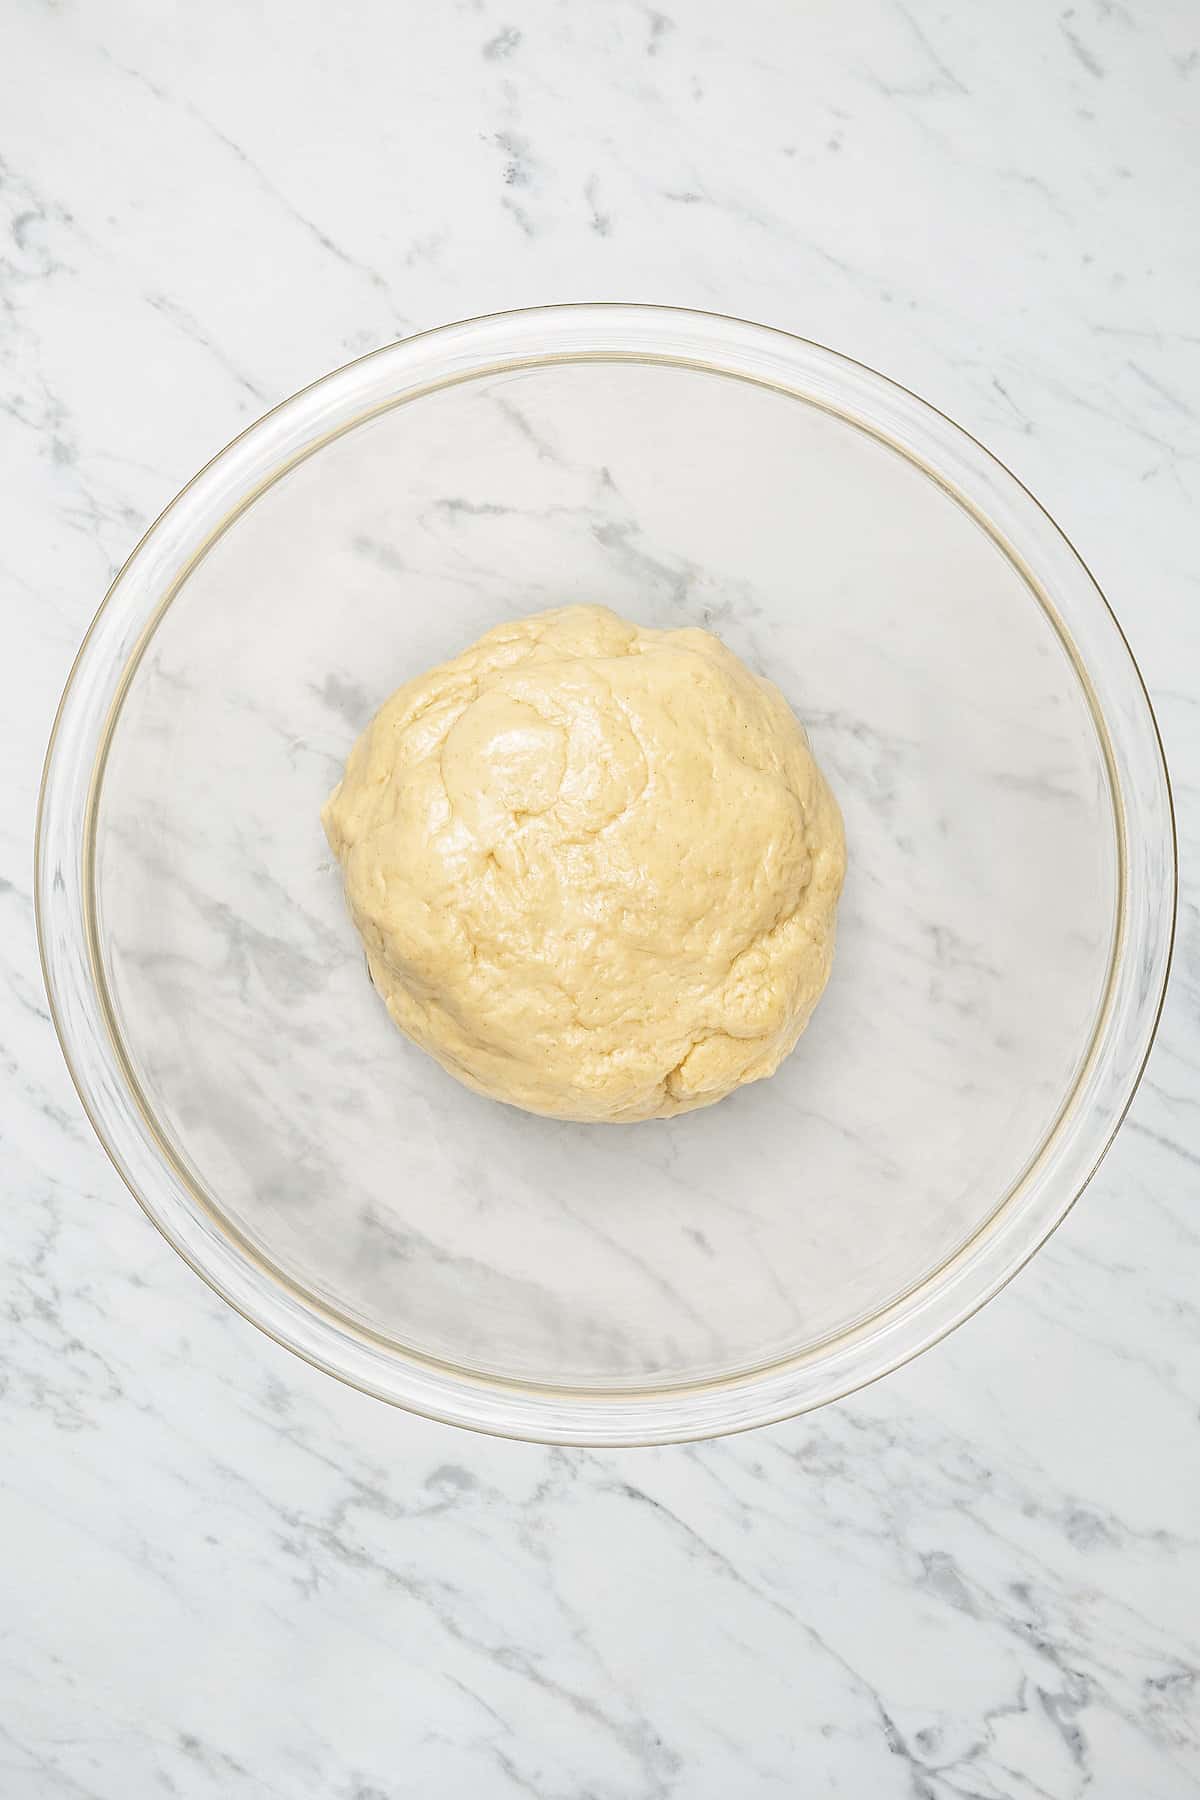 Honey bun dough in the bottom of a glass bowl.